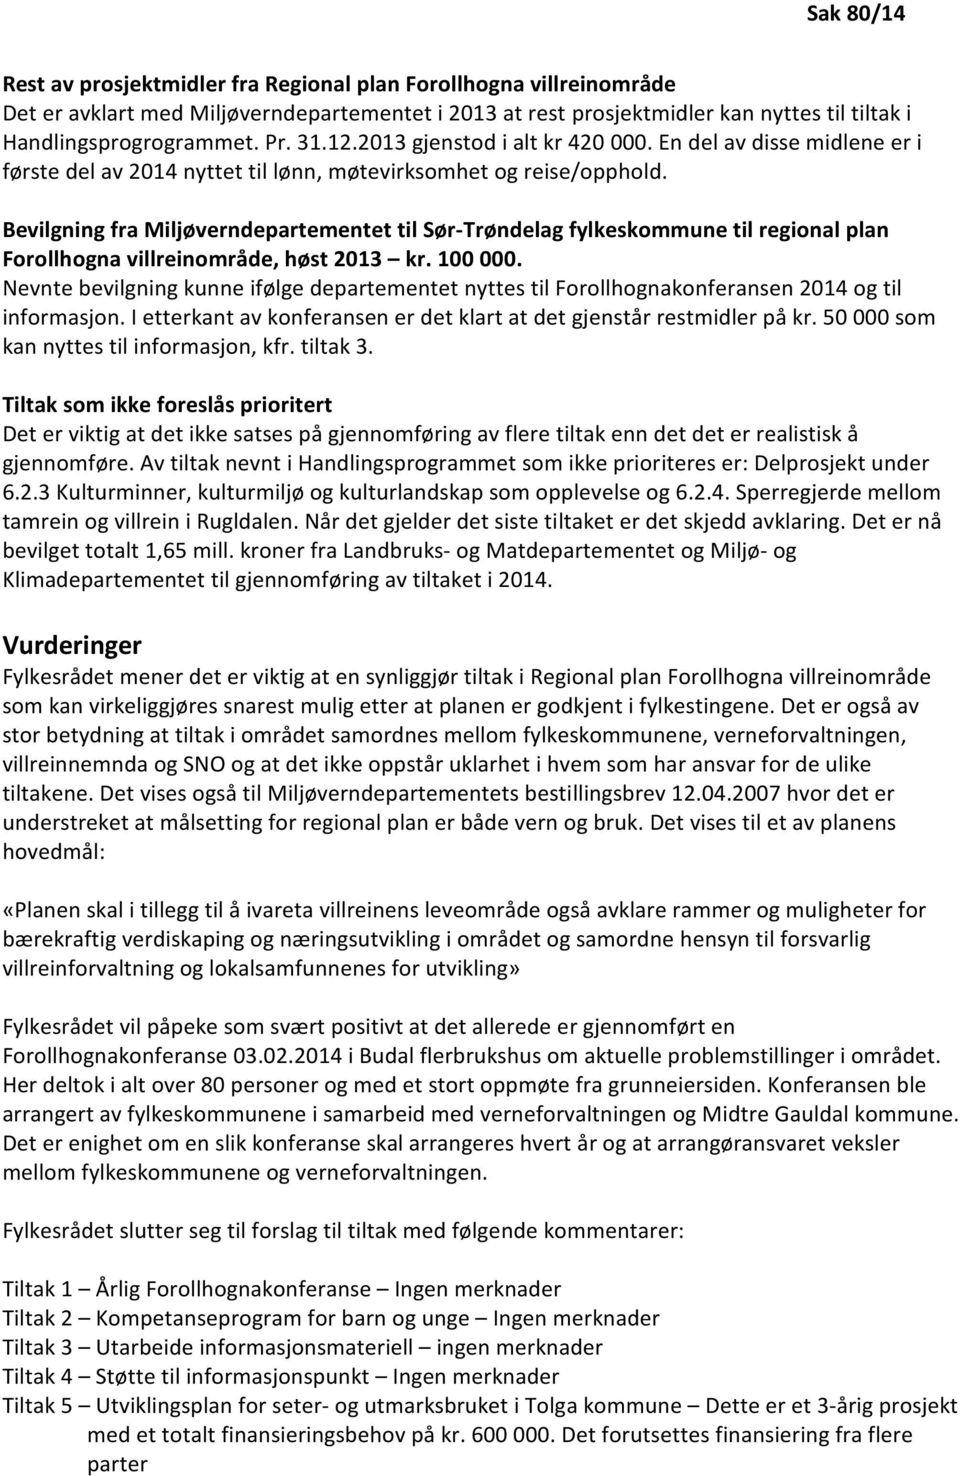 Bevilgning fra Miljøverndepartementet til Sør-Trøndelag fylkeskommune til regional plan Forollhogna villreinområde, høst 2013 kr. 100 000.